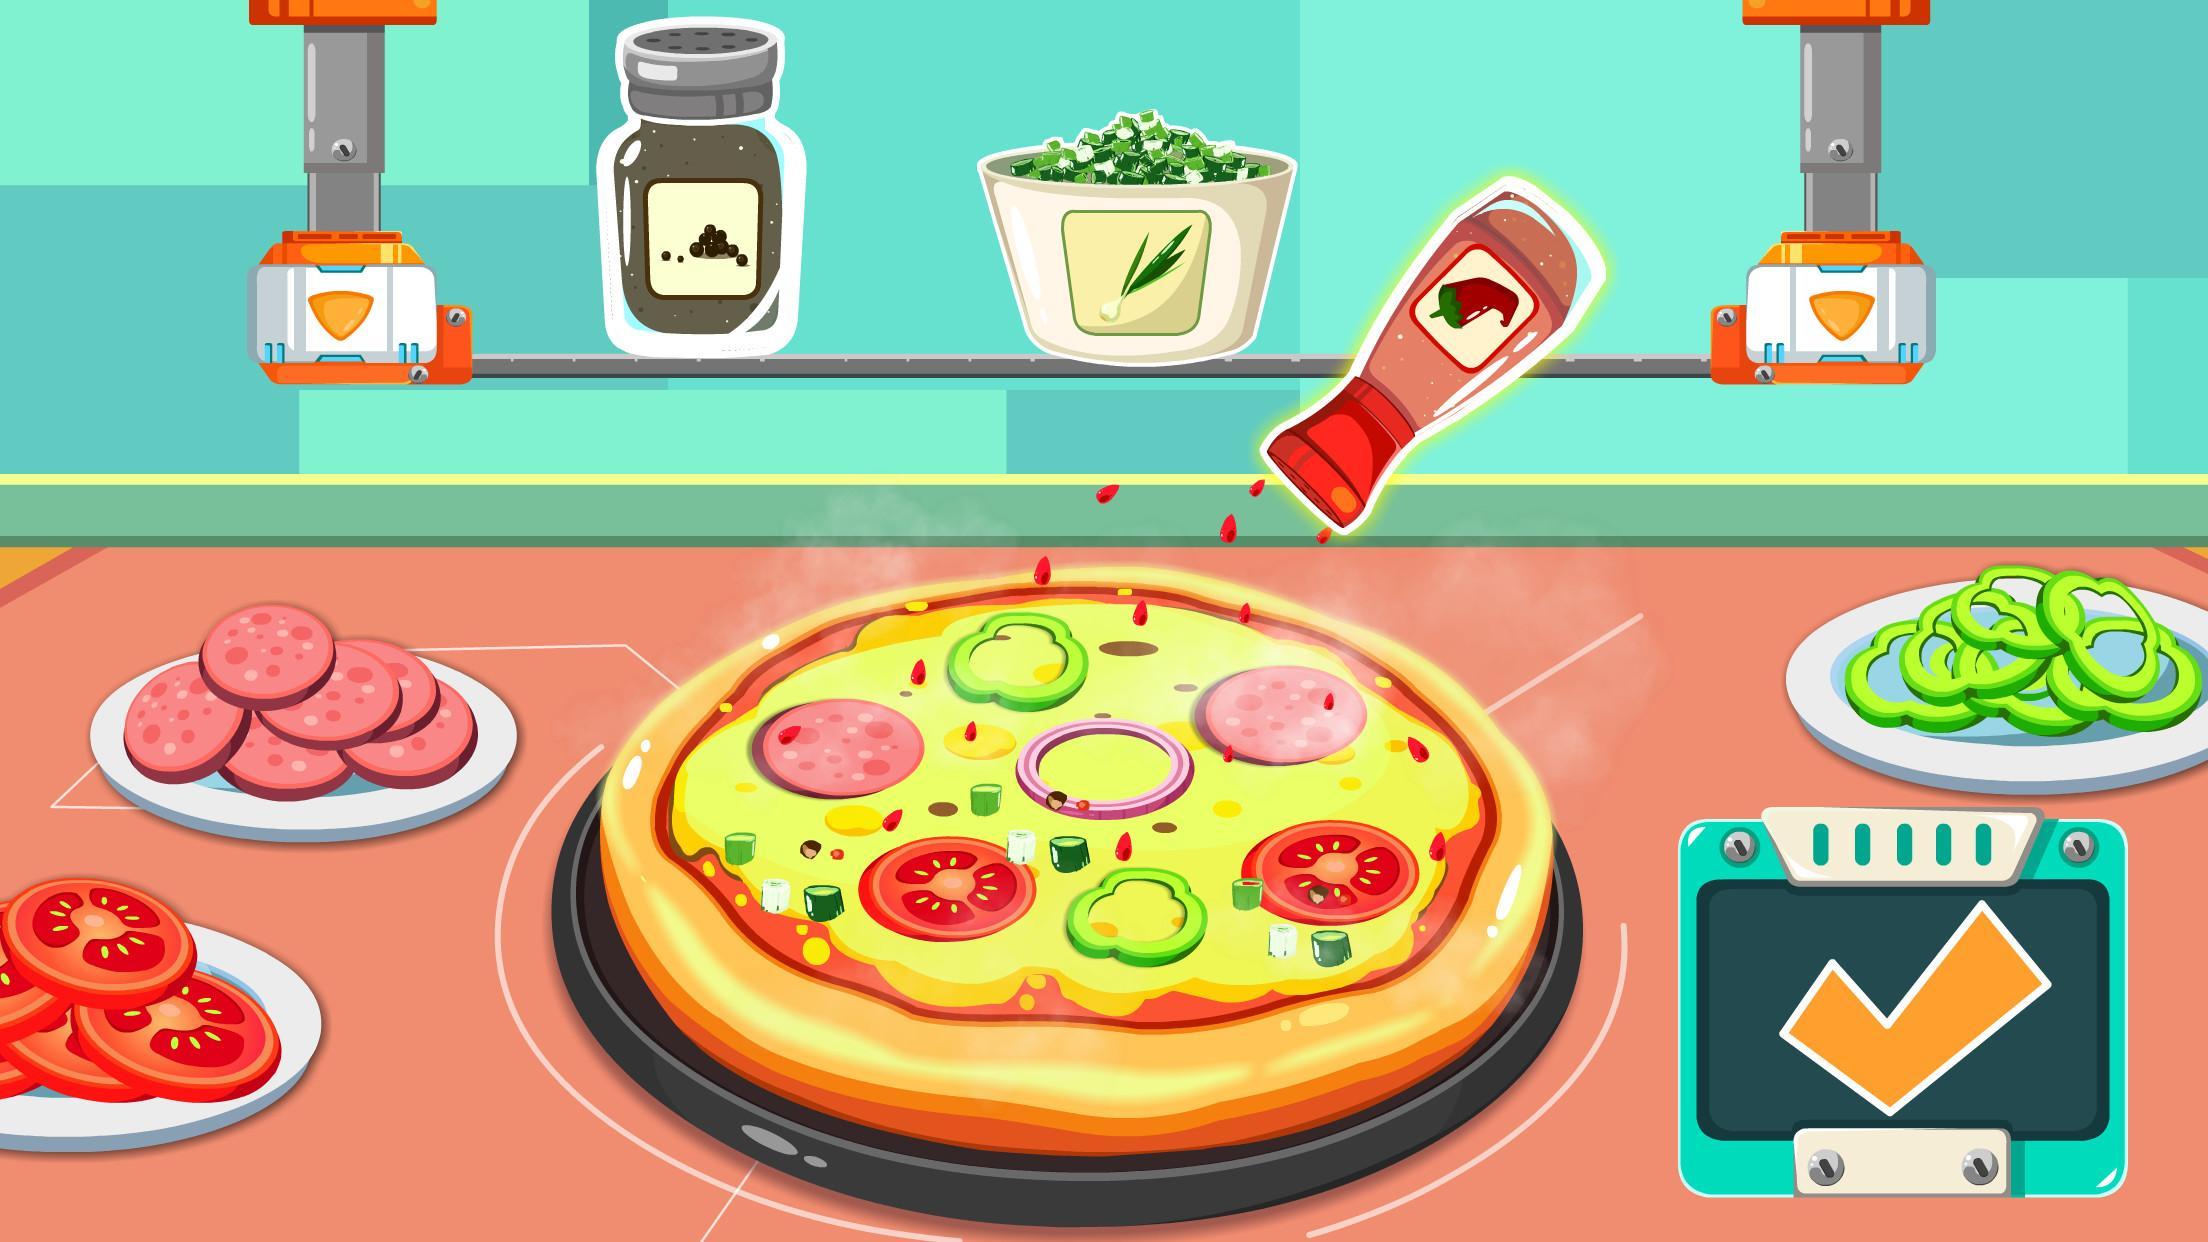 Little Panda’s Space Kitchen - Kids Cooking 8.57.00.00 Screenshot 16